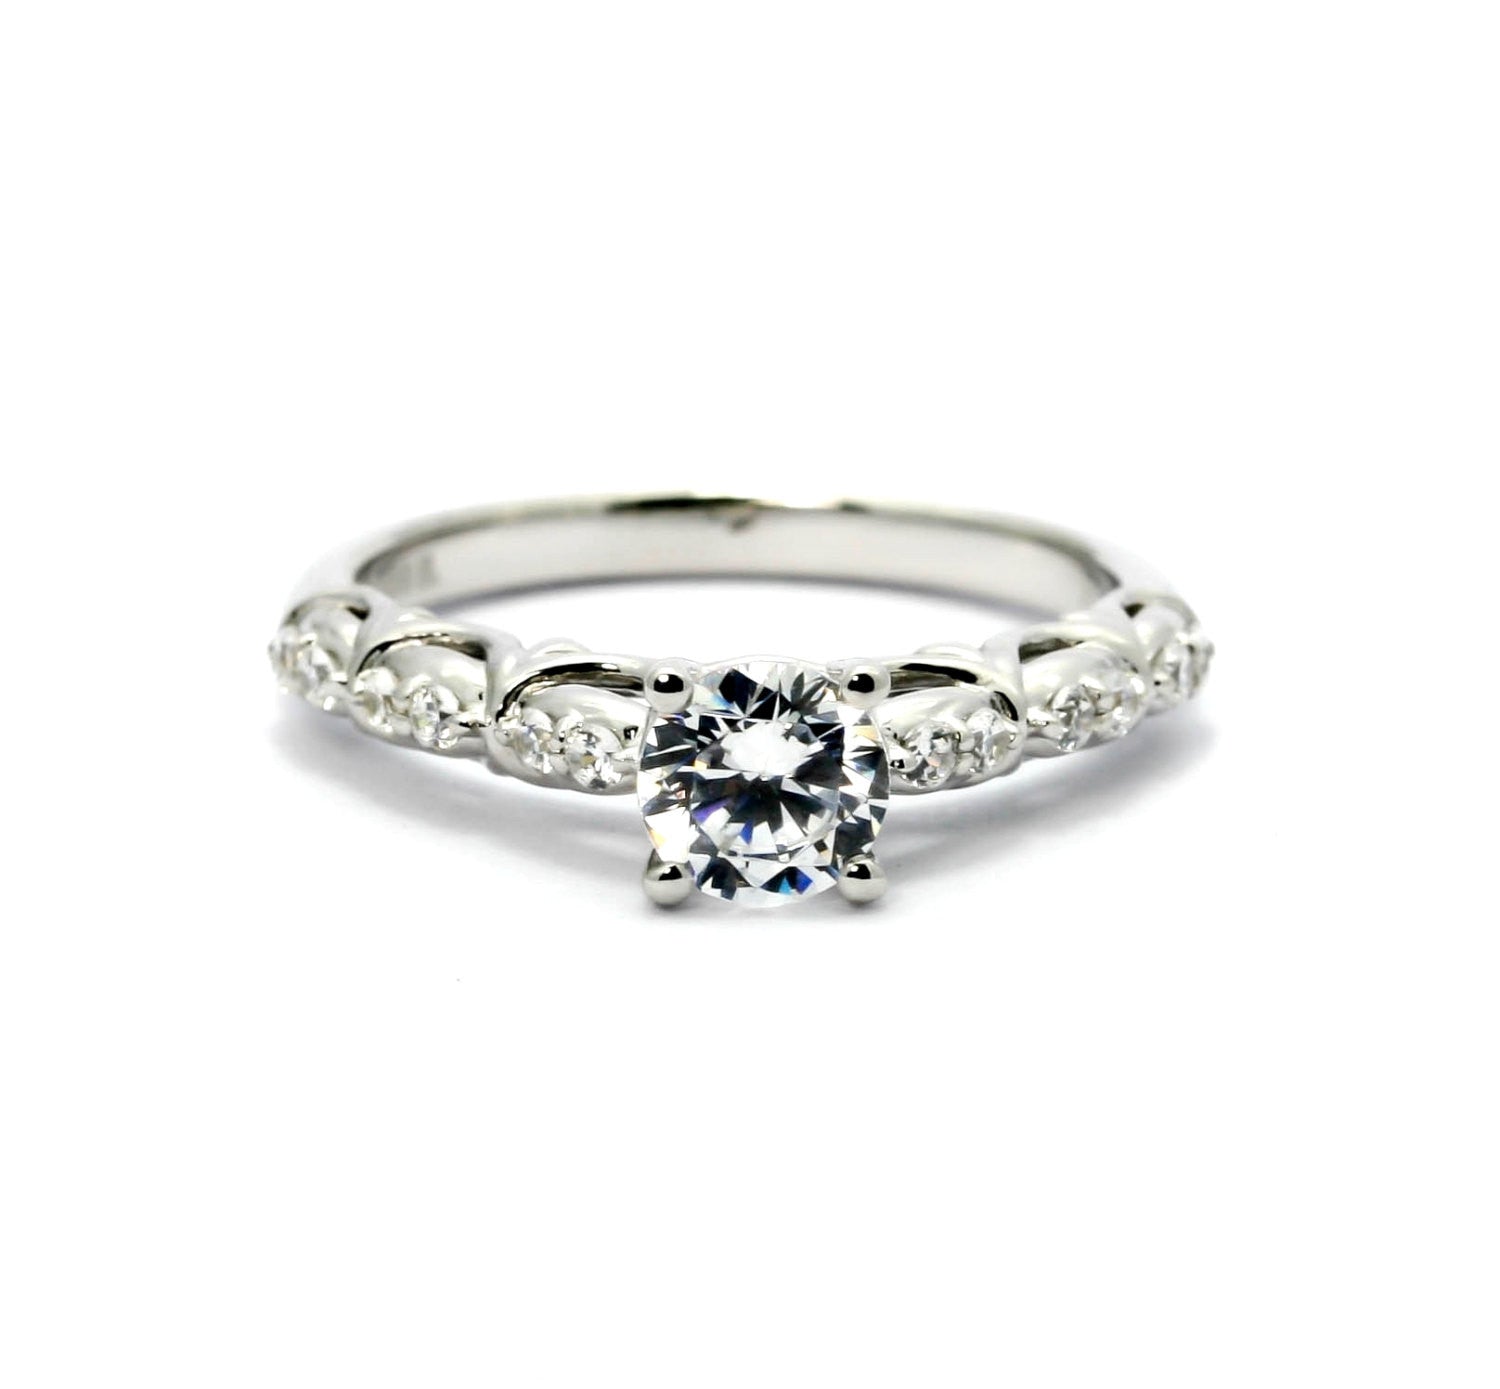 Rose Gold Diamond Engagement Ring Unique Solitaire, 1.0 Carat LG Diamond Center & .16 Carats Diamond Accent Stones, Anniversary Ring - LGDY11690SE